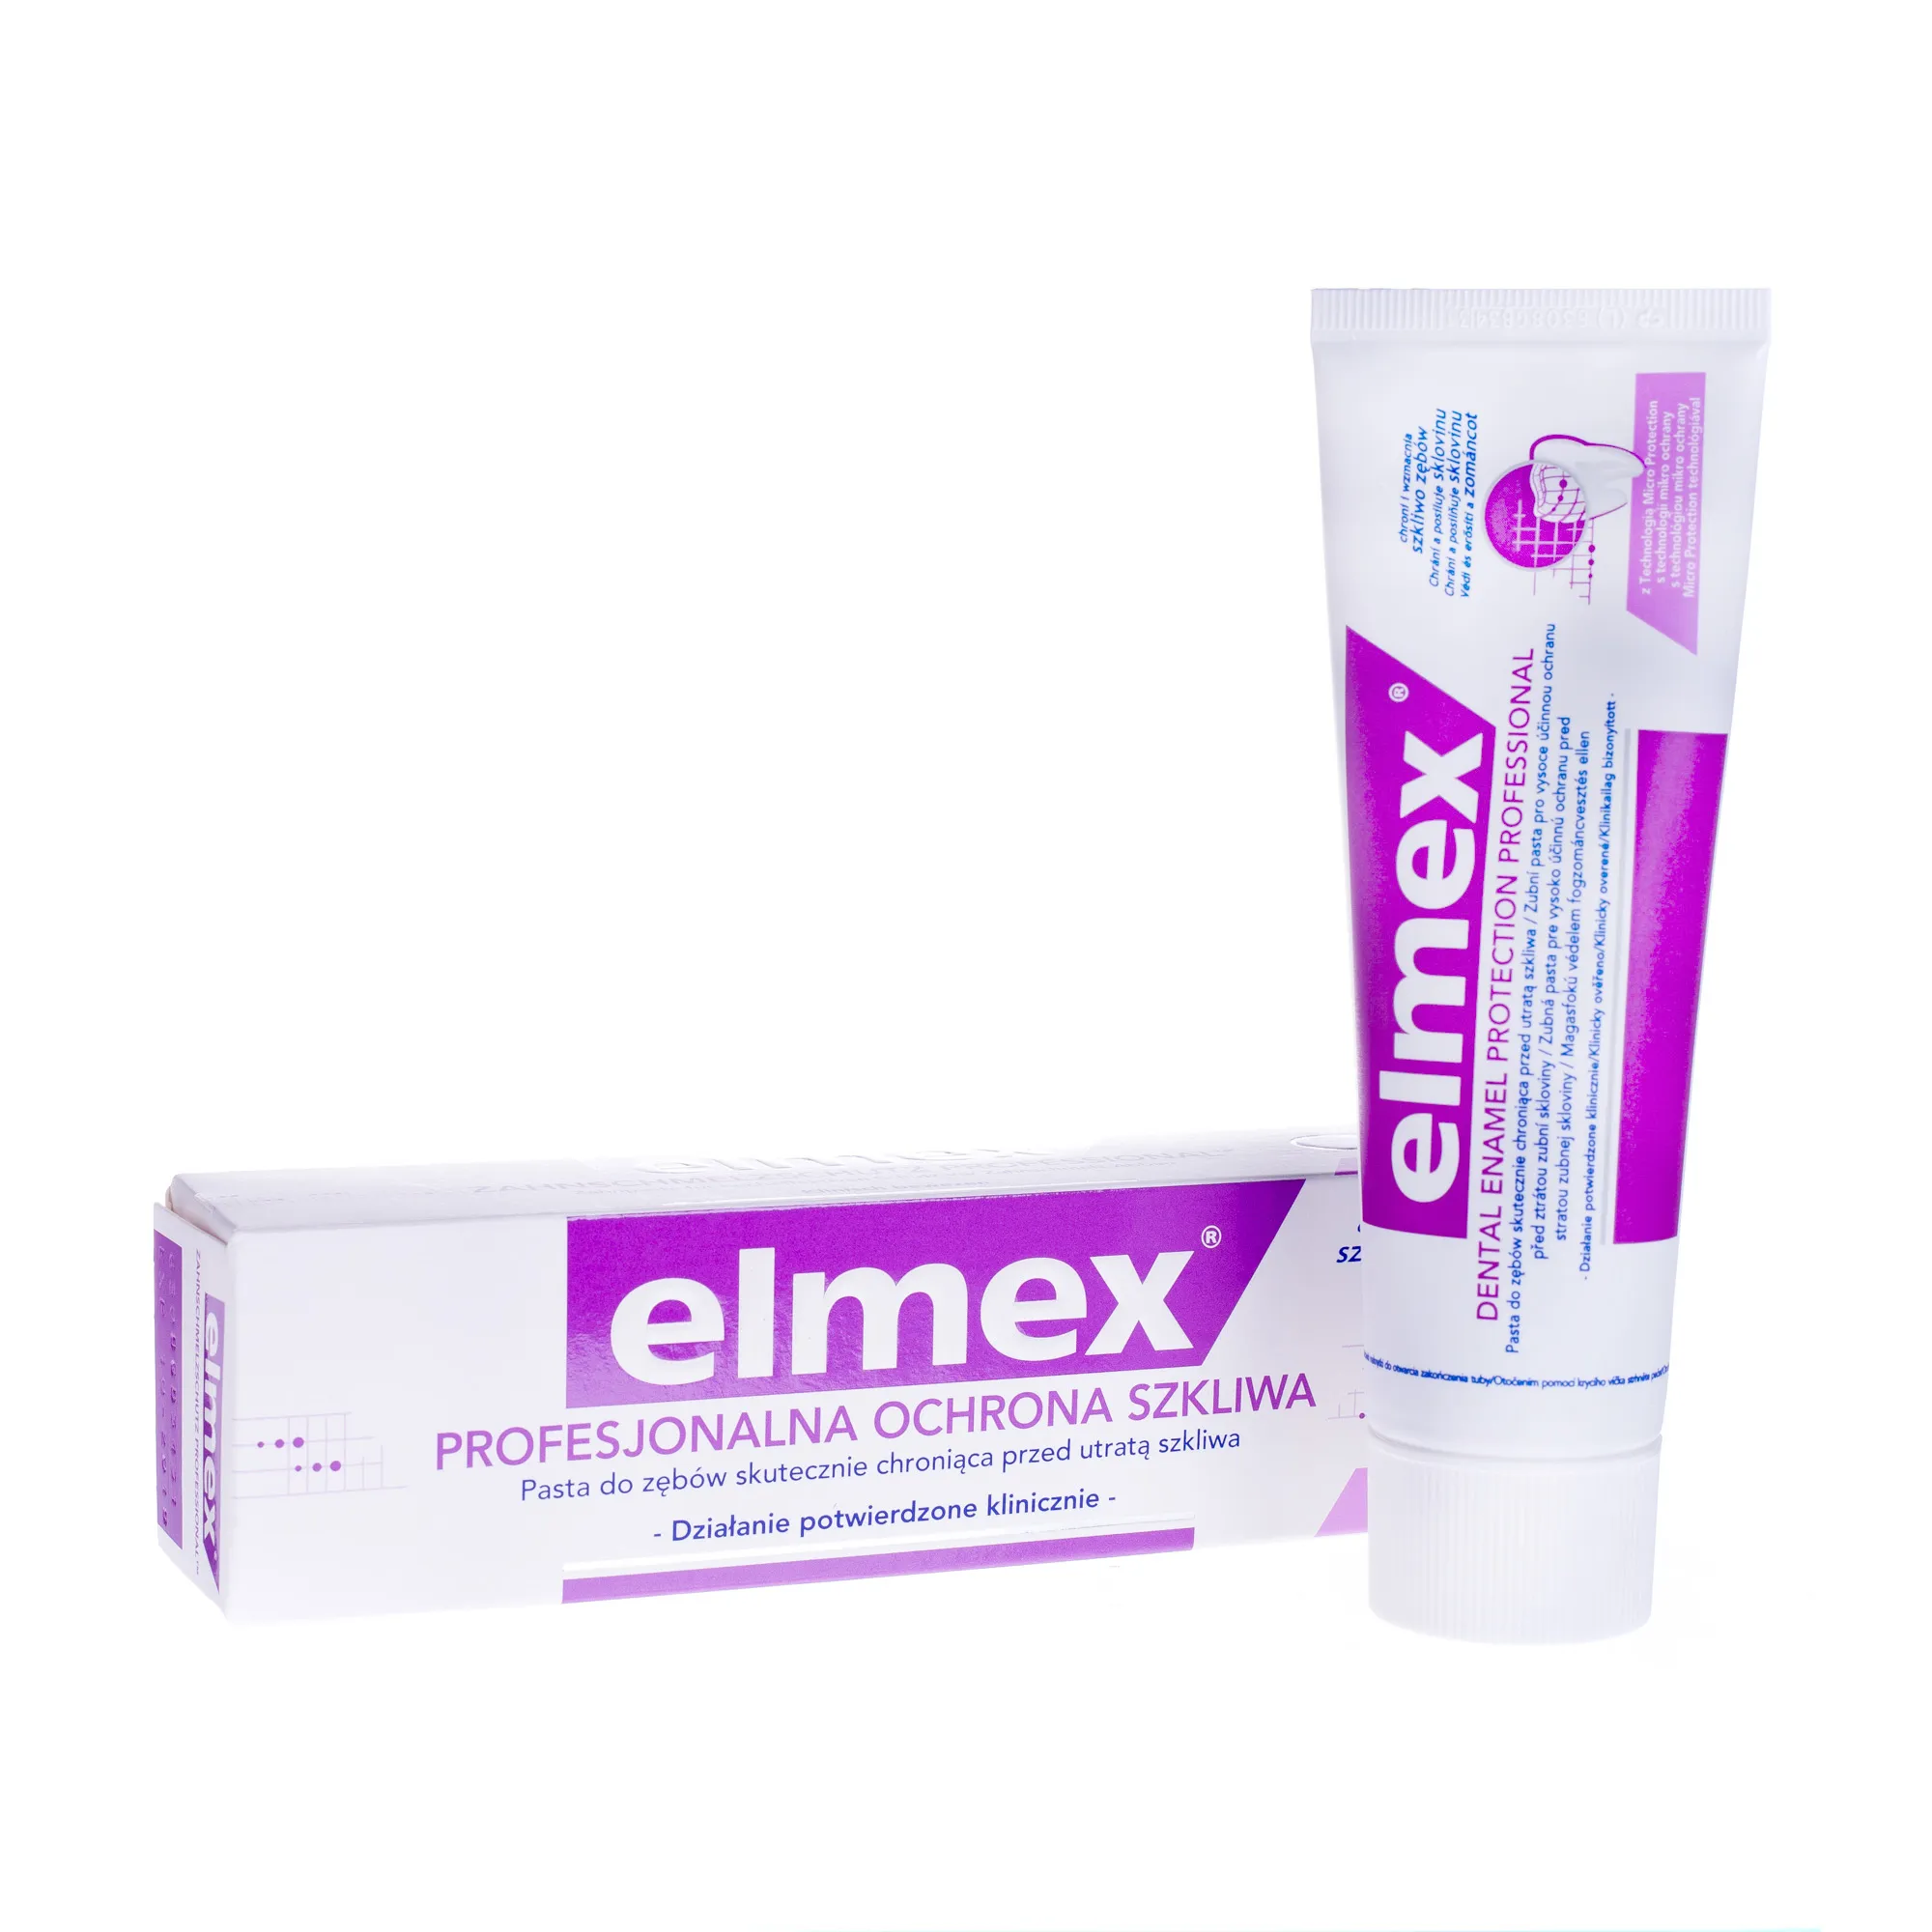 Elmex, profesjonalna ochrona szkliwa, 75 ml